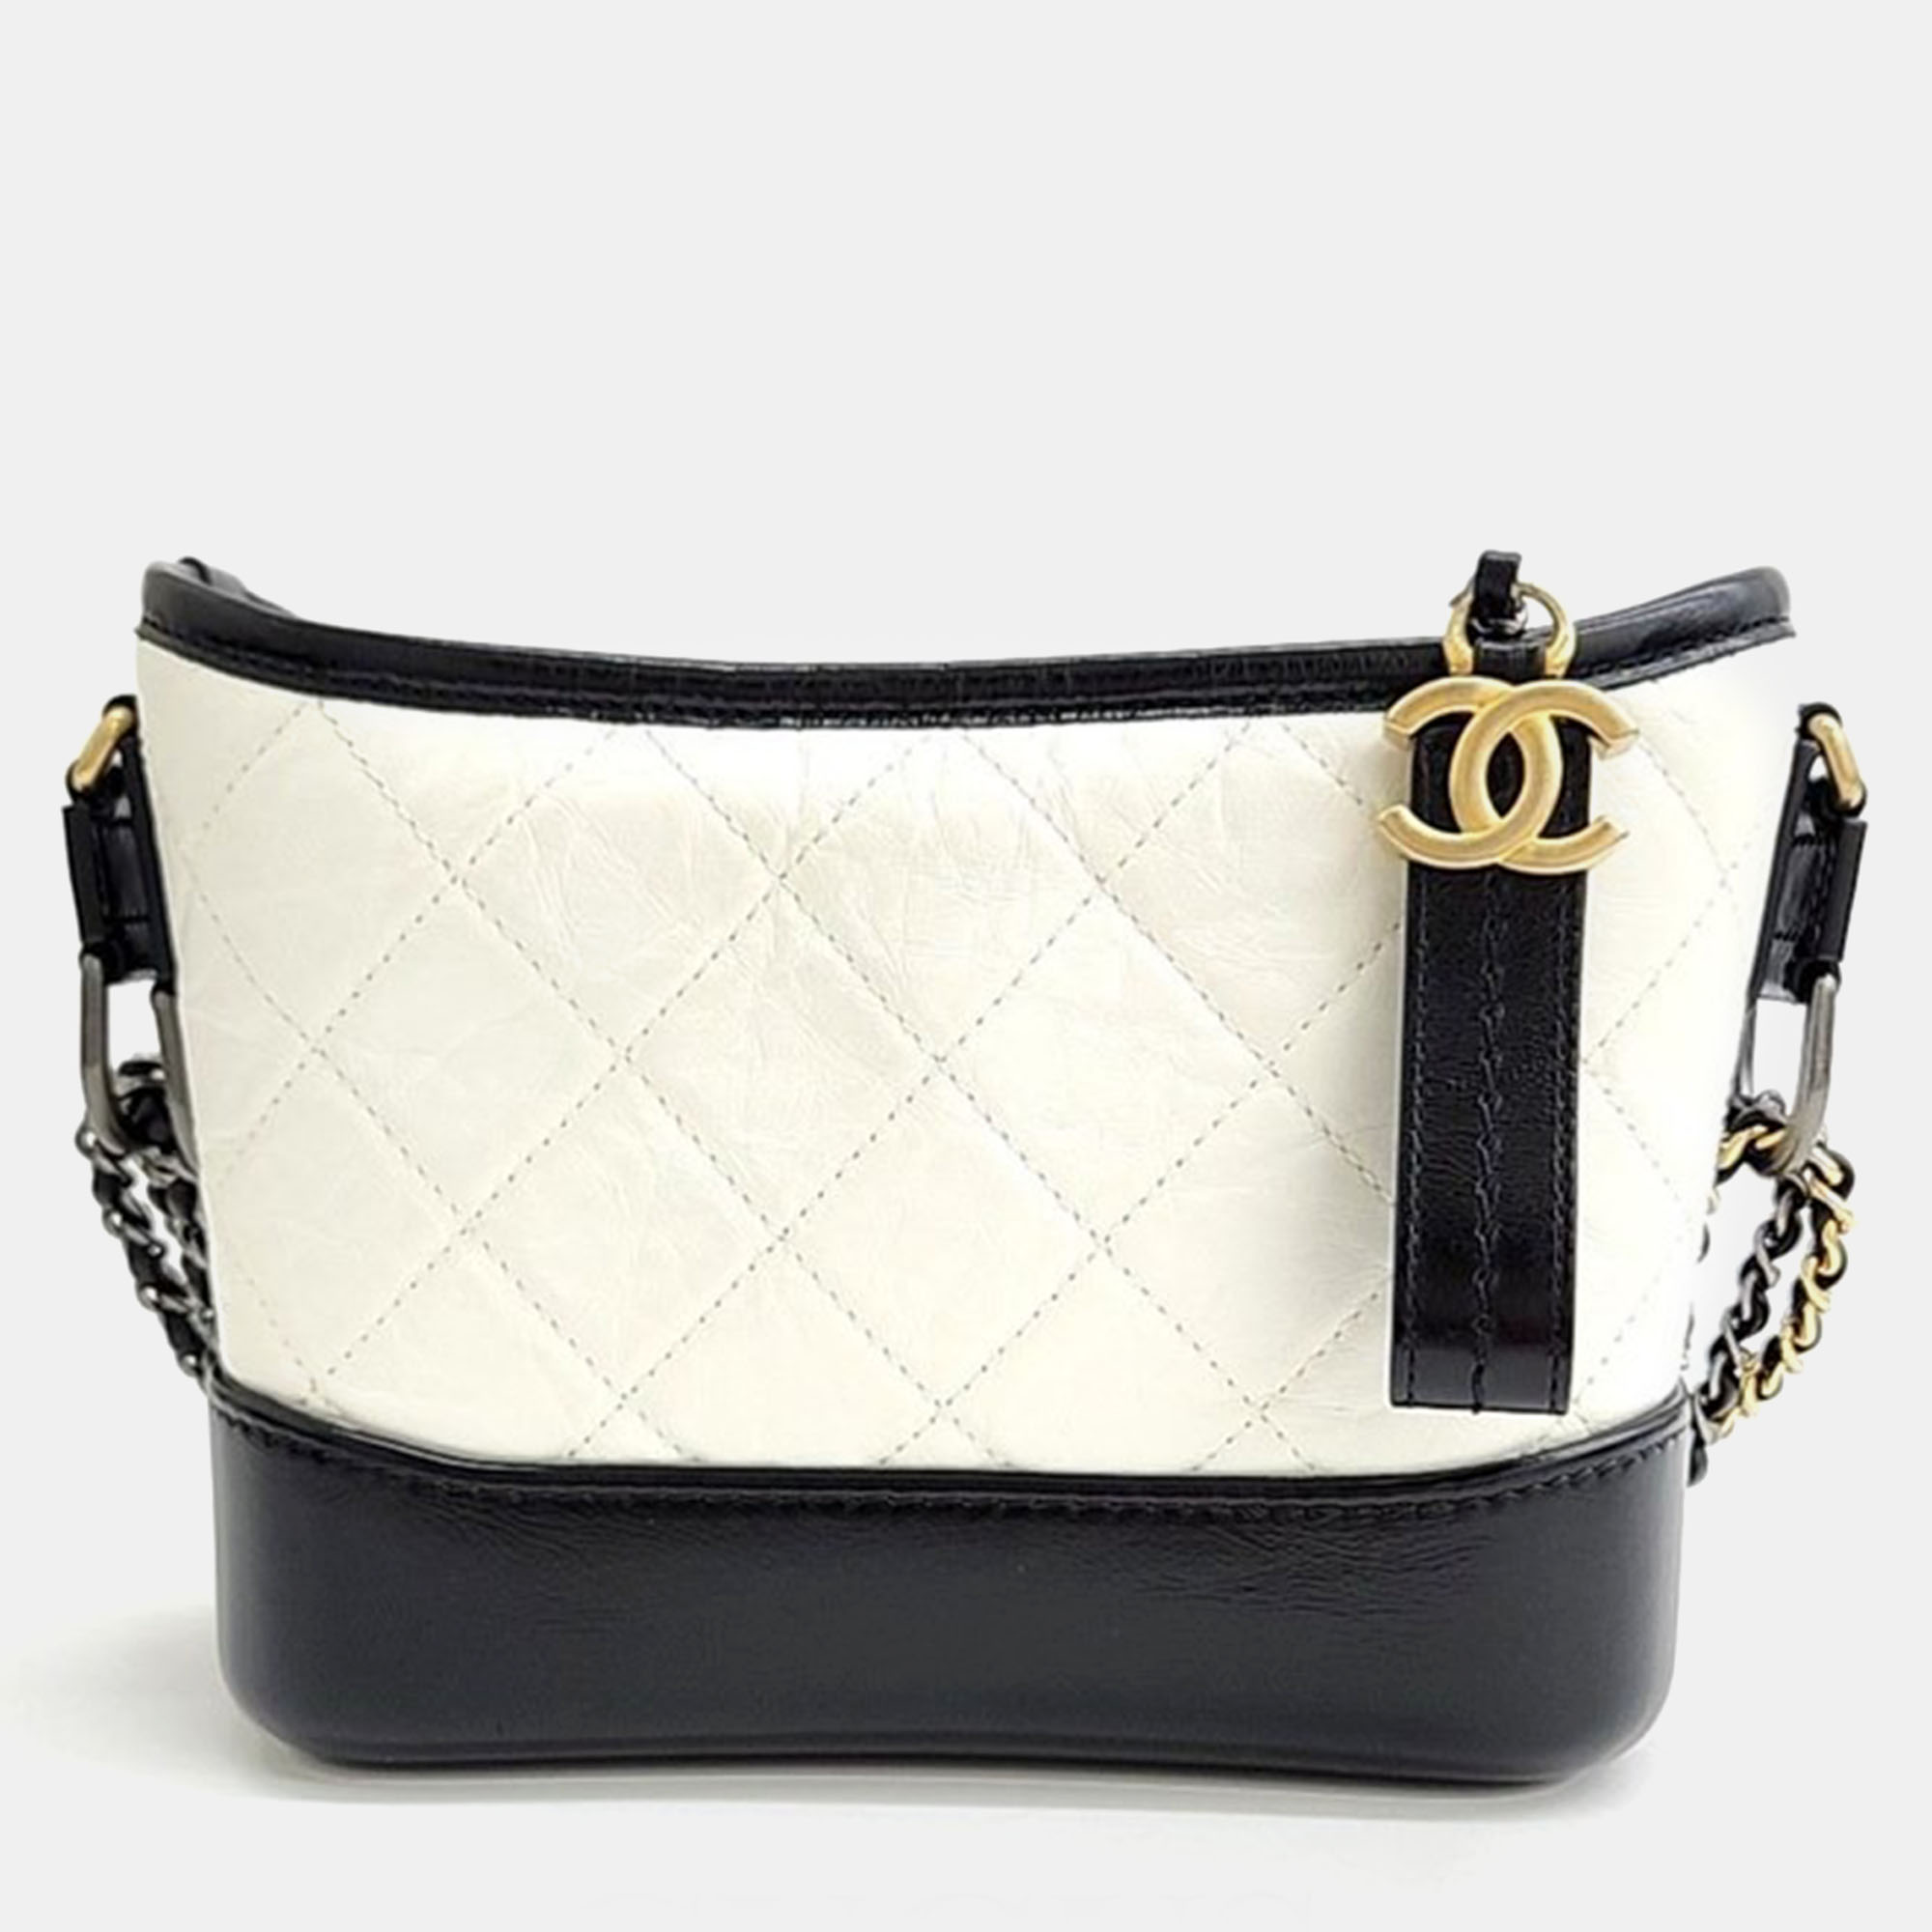 

Chanel Gabrielle Hobo Small Bag, Black